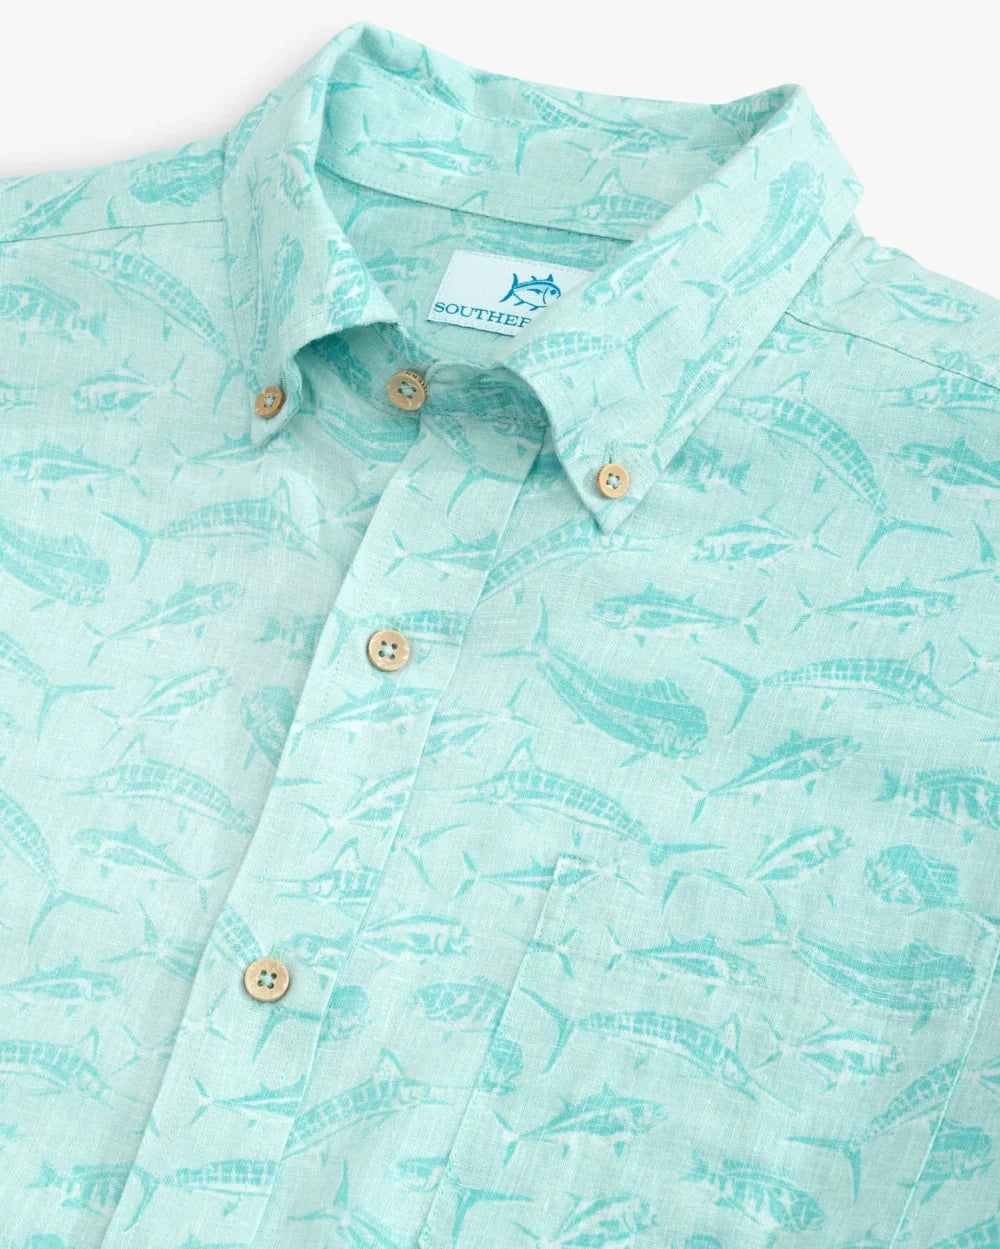 Southern Tide Linen/Rayon Short Sleeve Sport Shirt